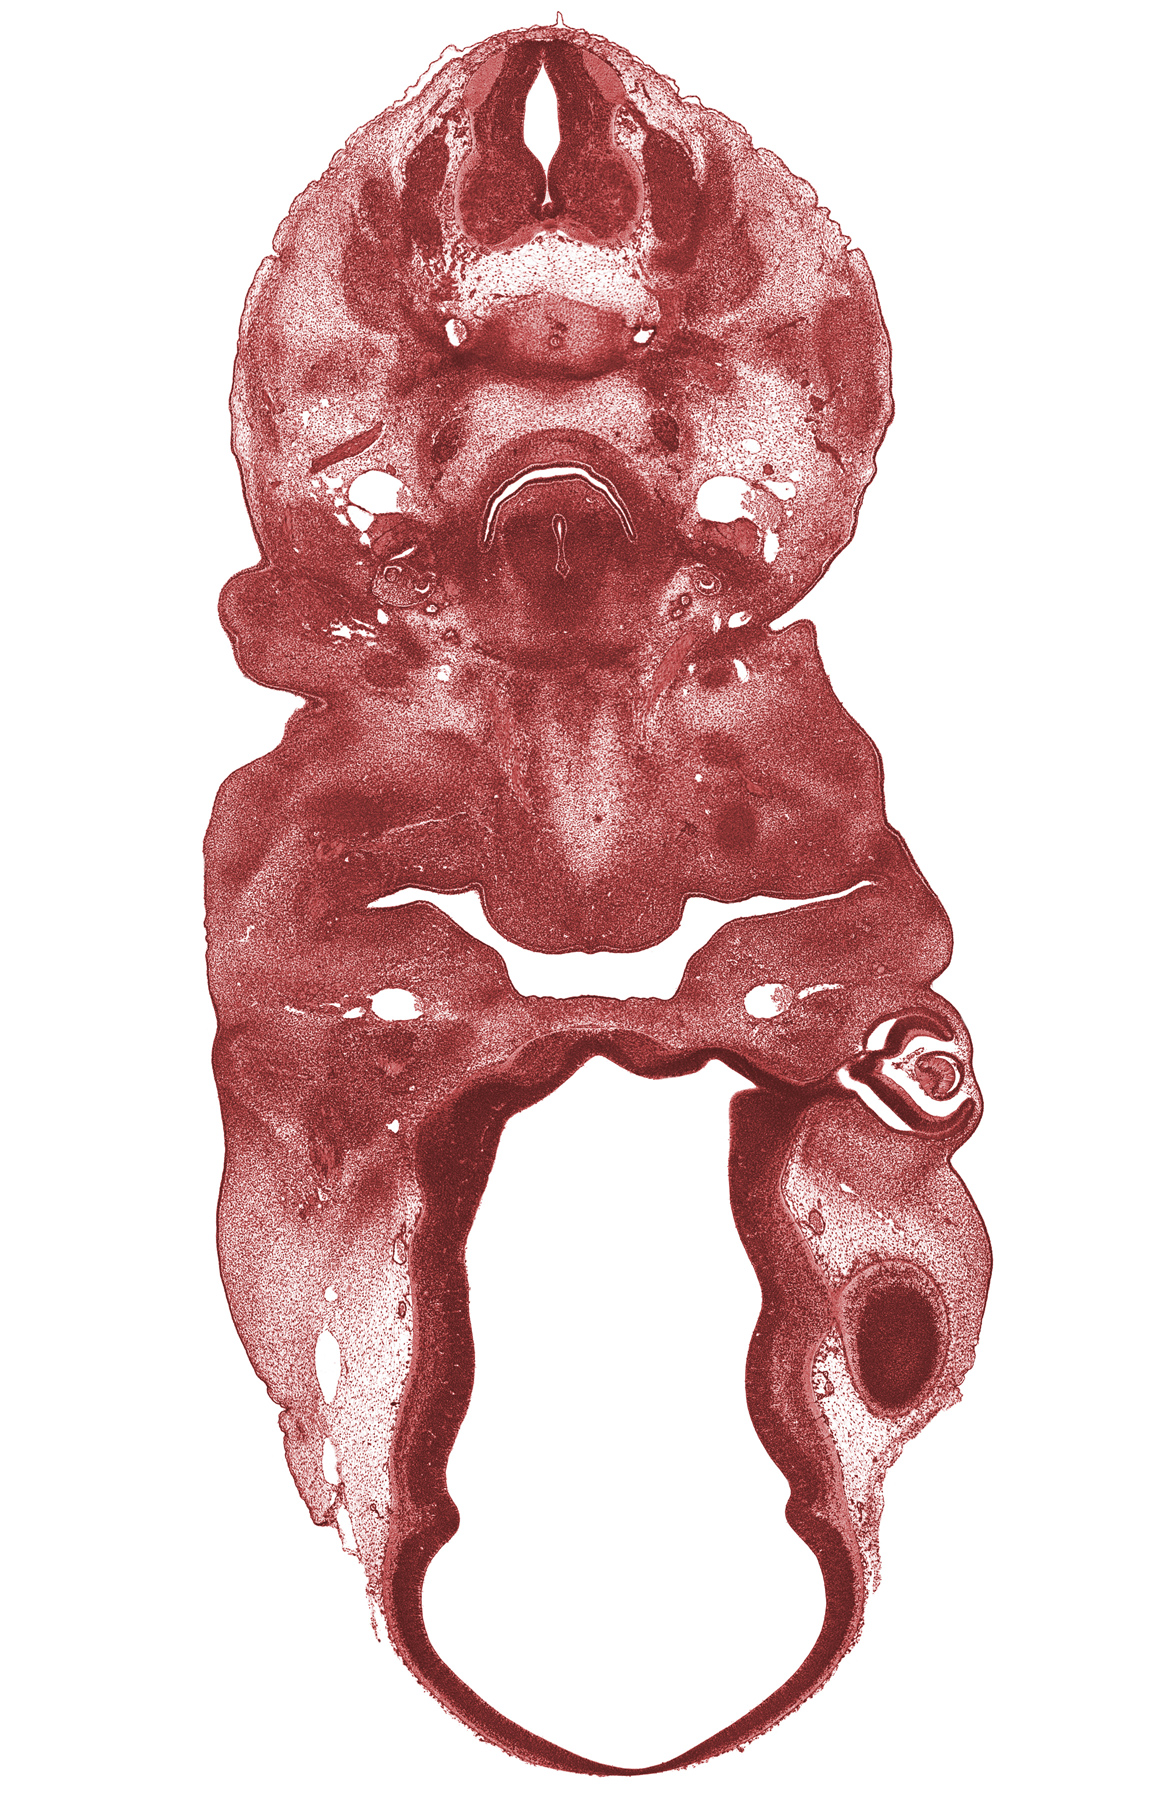 C-5 spinal nerve, C-6 spinal ganglion, central canal, corneal epithelium, epithelial lamina of larynx, hypoglossal nerve (CN XII), internal layer of retina, laryngeal condensation, mandibular prominence of pharyngeal arch 1, maxillary prominence of pharyngeal arch 1, meninx, missing tissue (artifact), oral cavity, oronasal cavity, precardinal vein, primary lens fiber, tongue